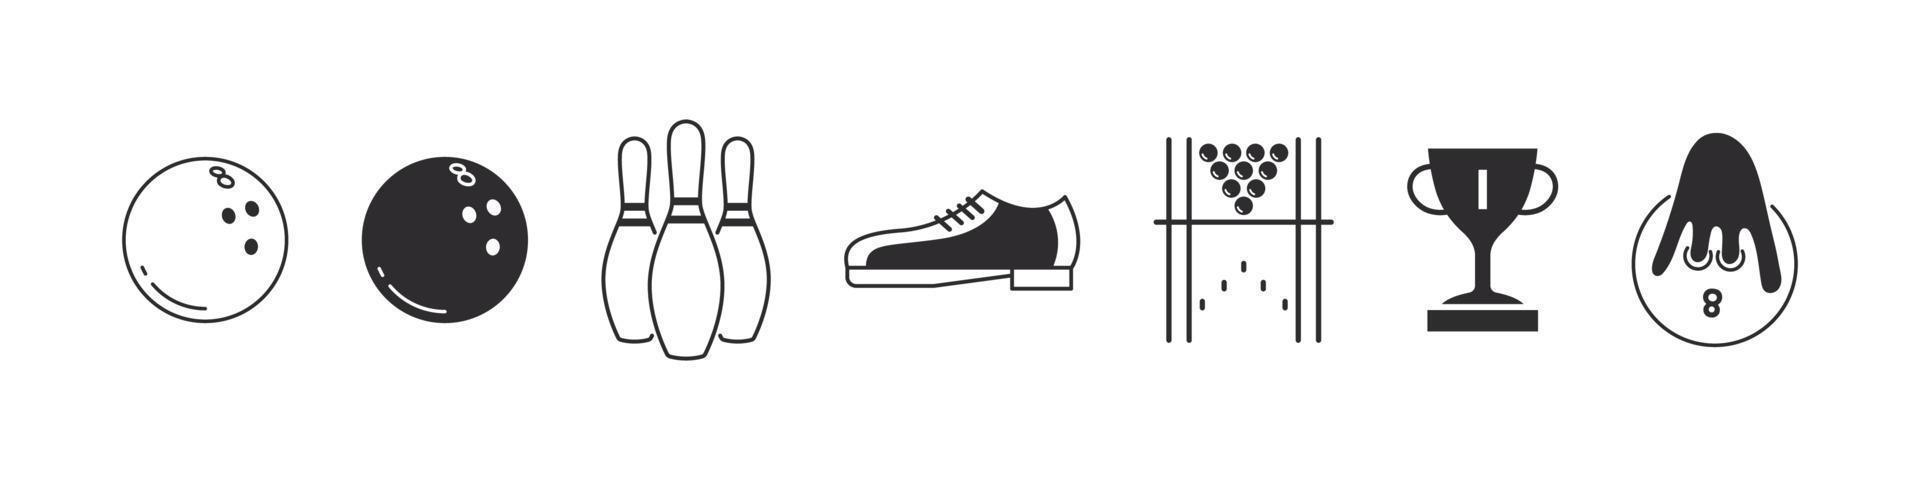 Bowling-Symbole. Bowlingkugeln und Kegel. Bowling-Elemente für Design. Vektorsymbole vektor